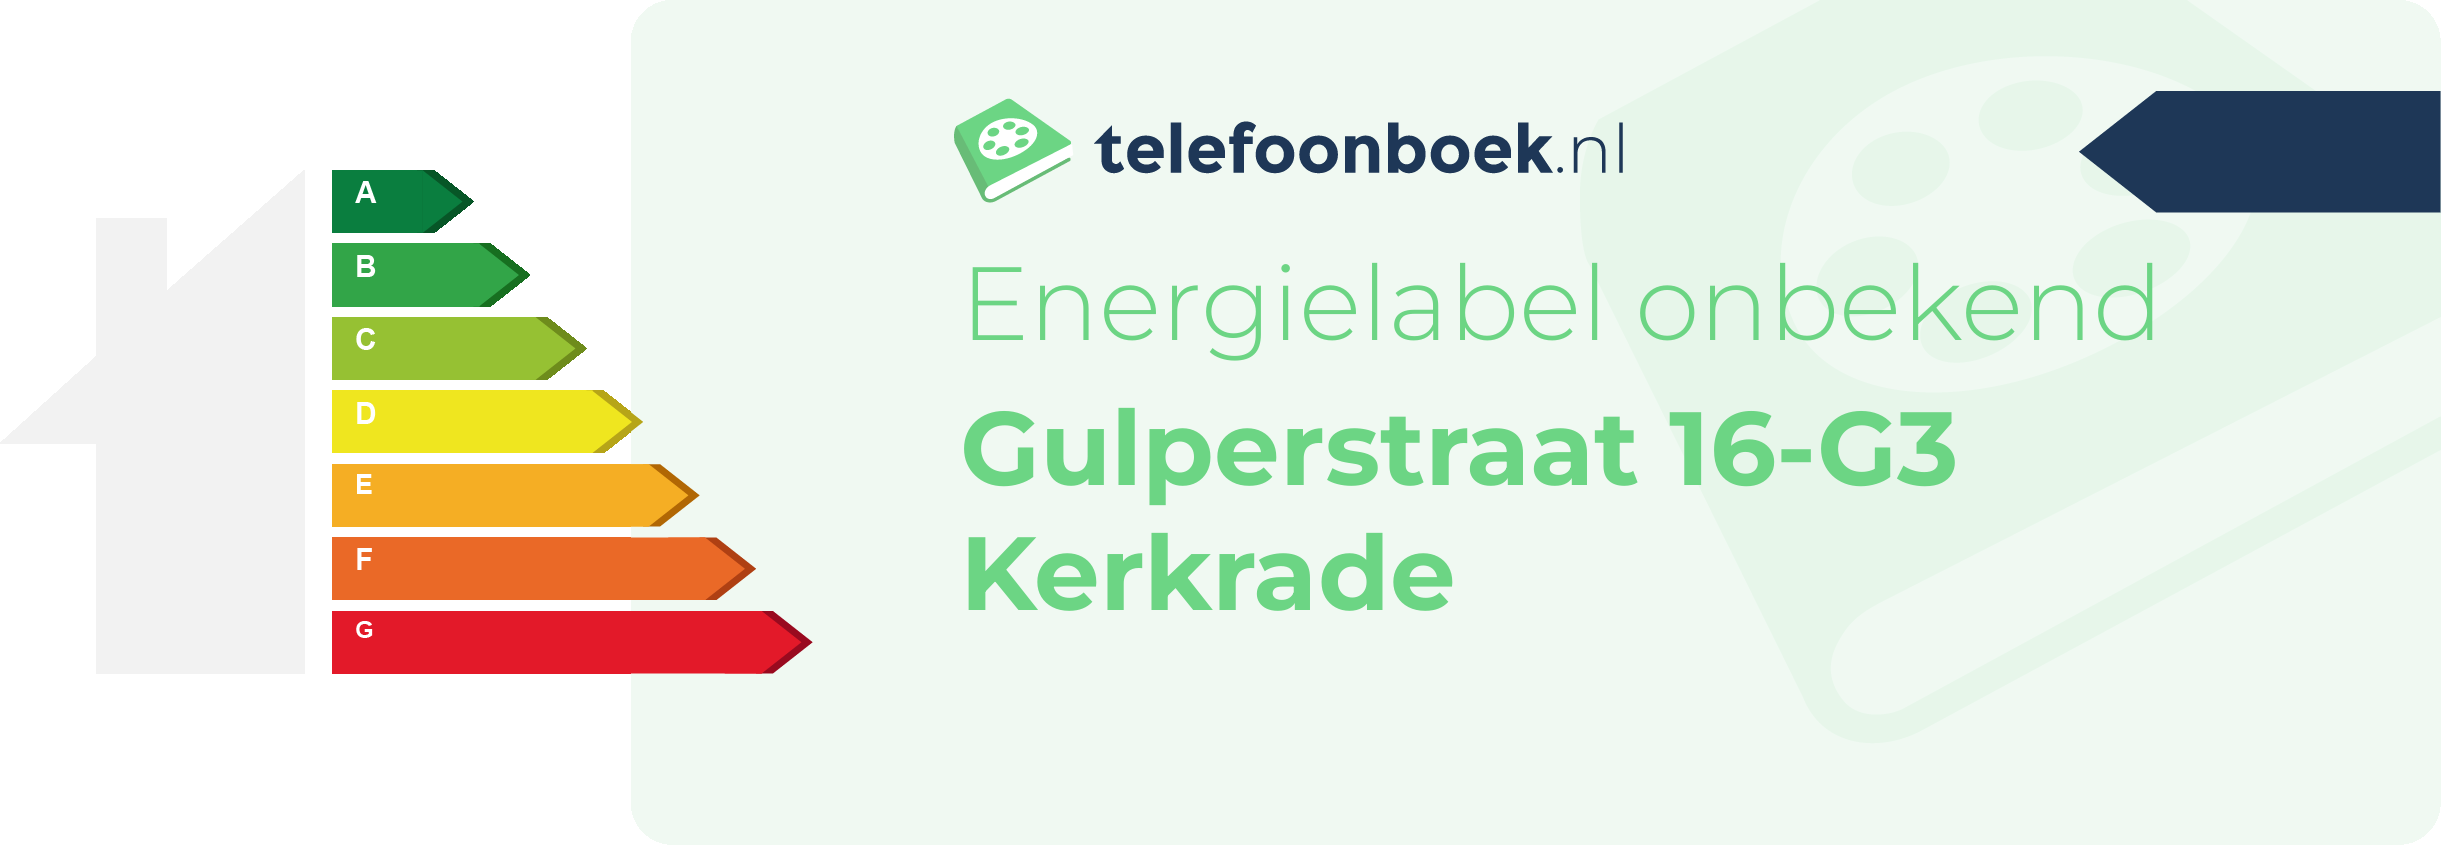 Energielabel Gulperstraat 16-G3 Kerkrade